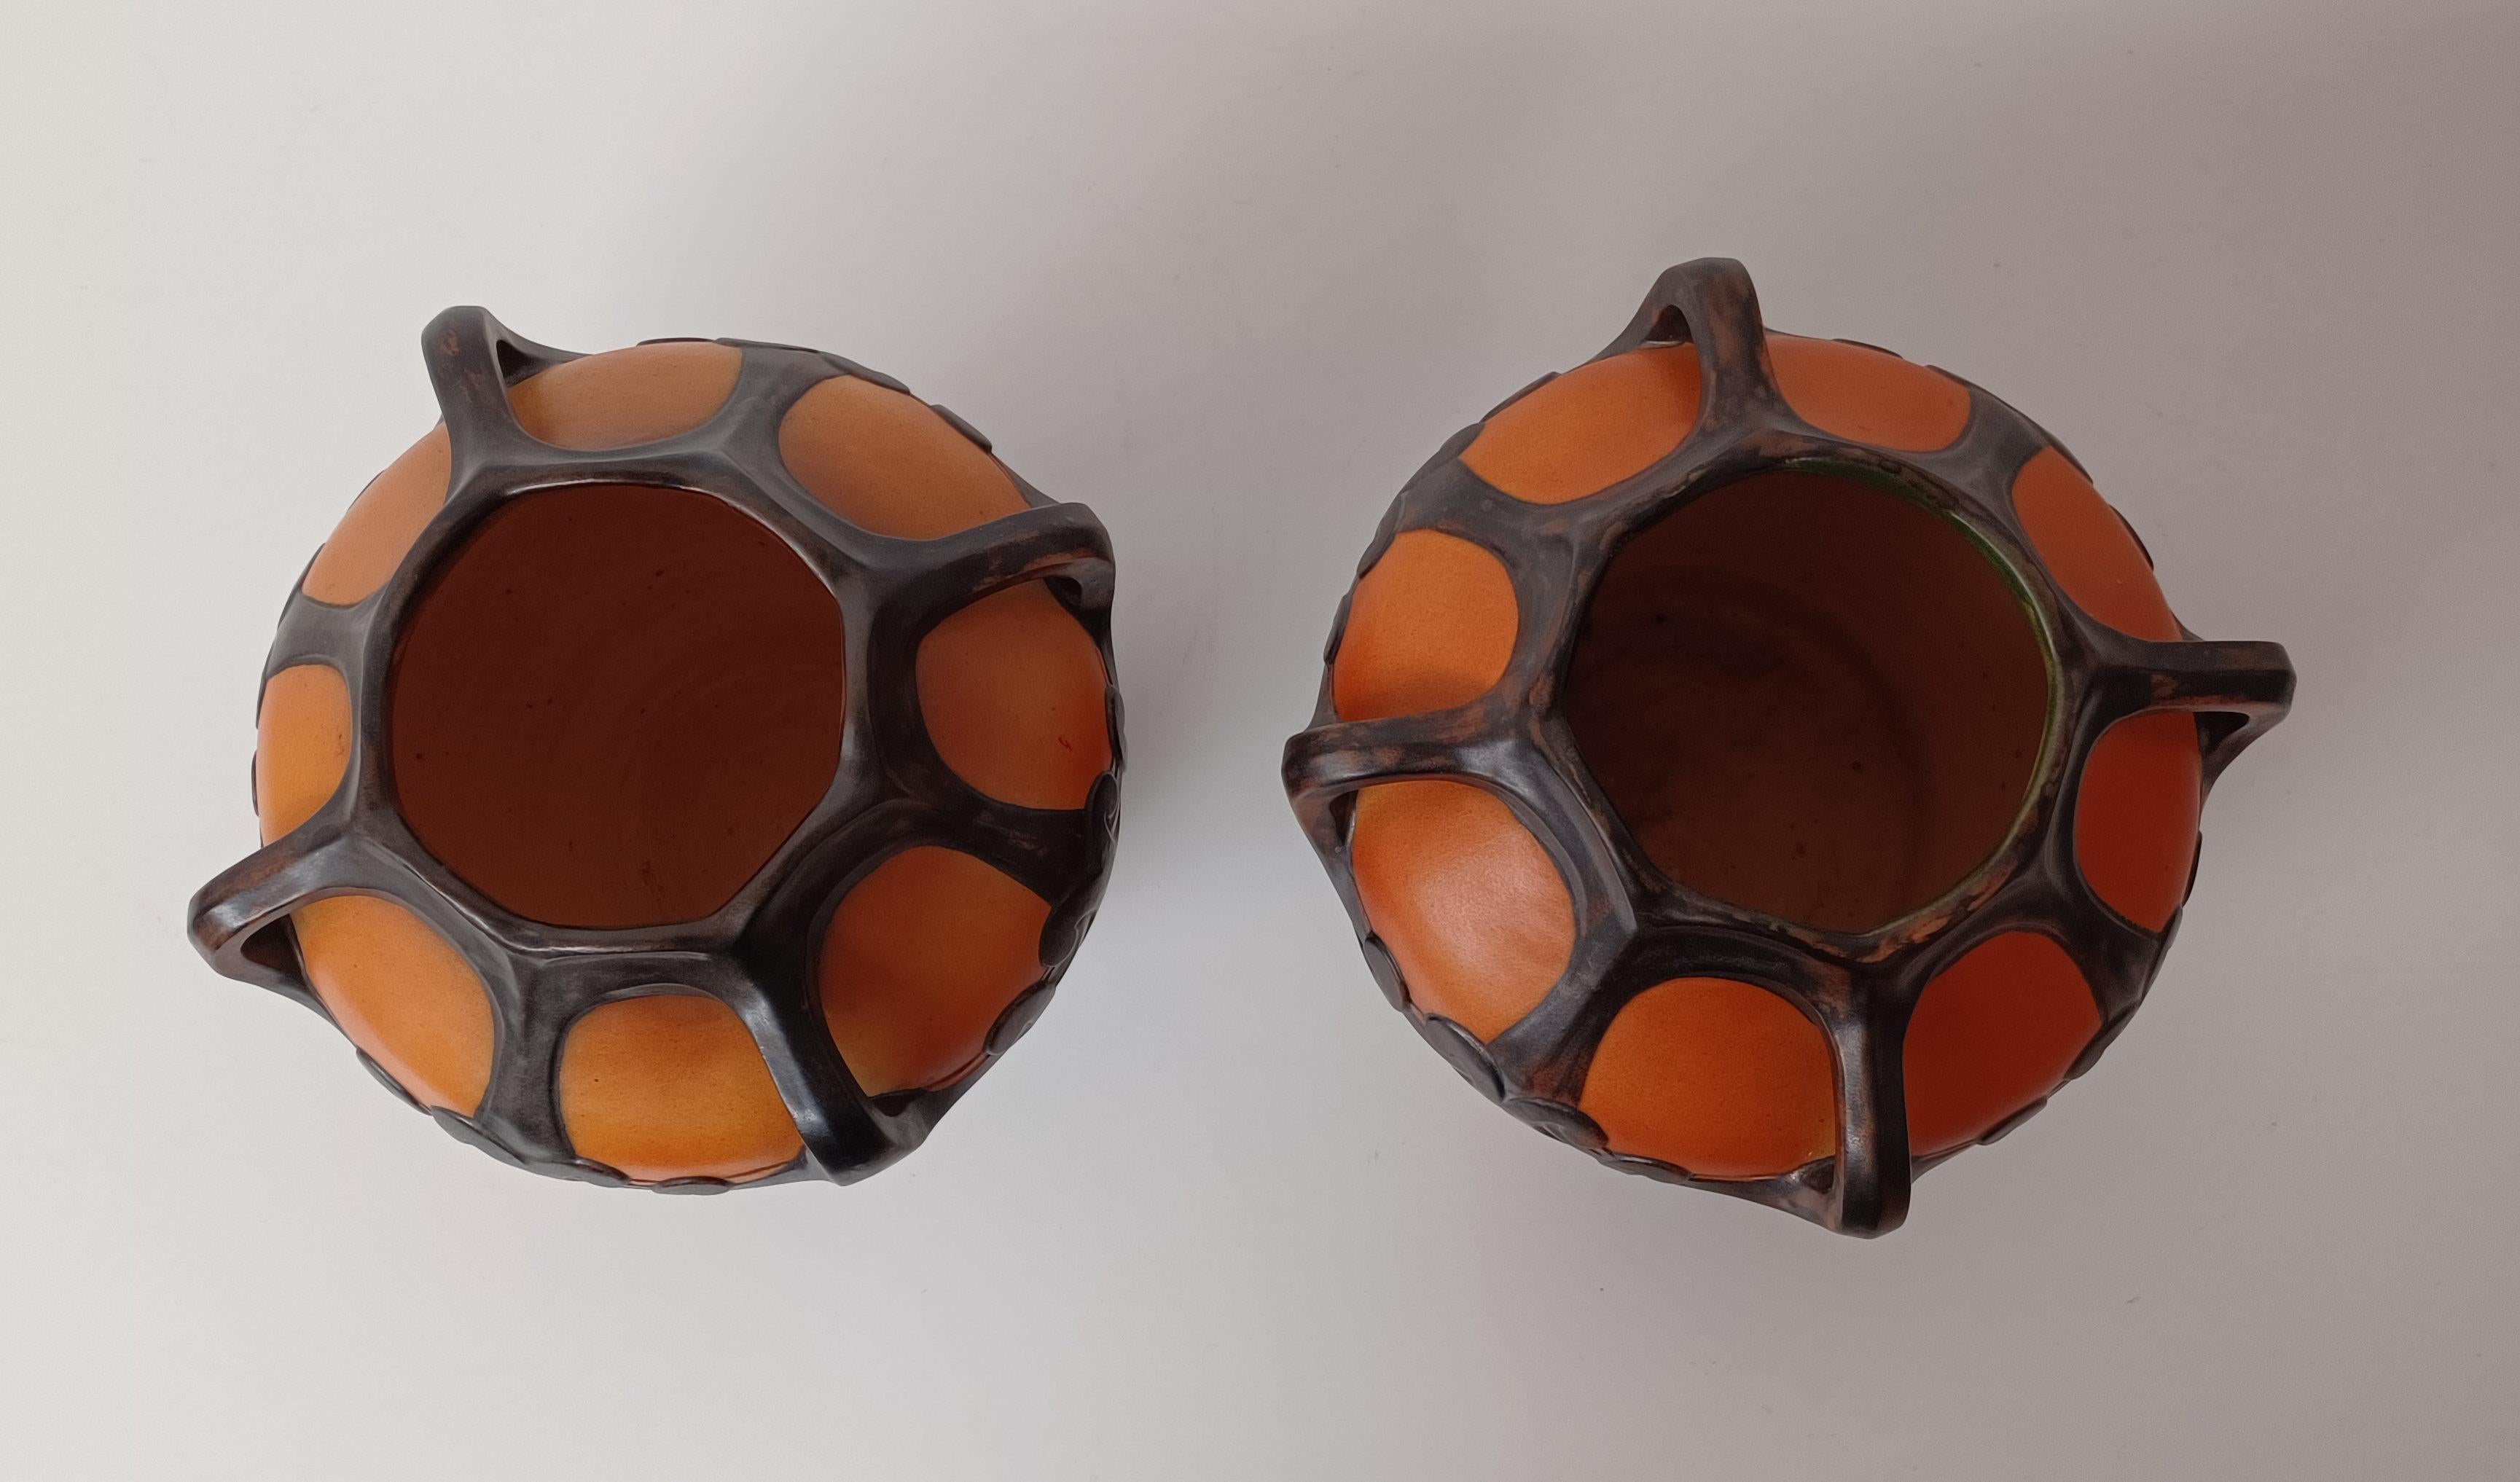 Ceramic 1900s Two Karen Hagen Hand-Crafted Danish Art Nouveau Vases by P. Ipsens Enke For Sale